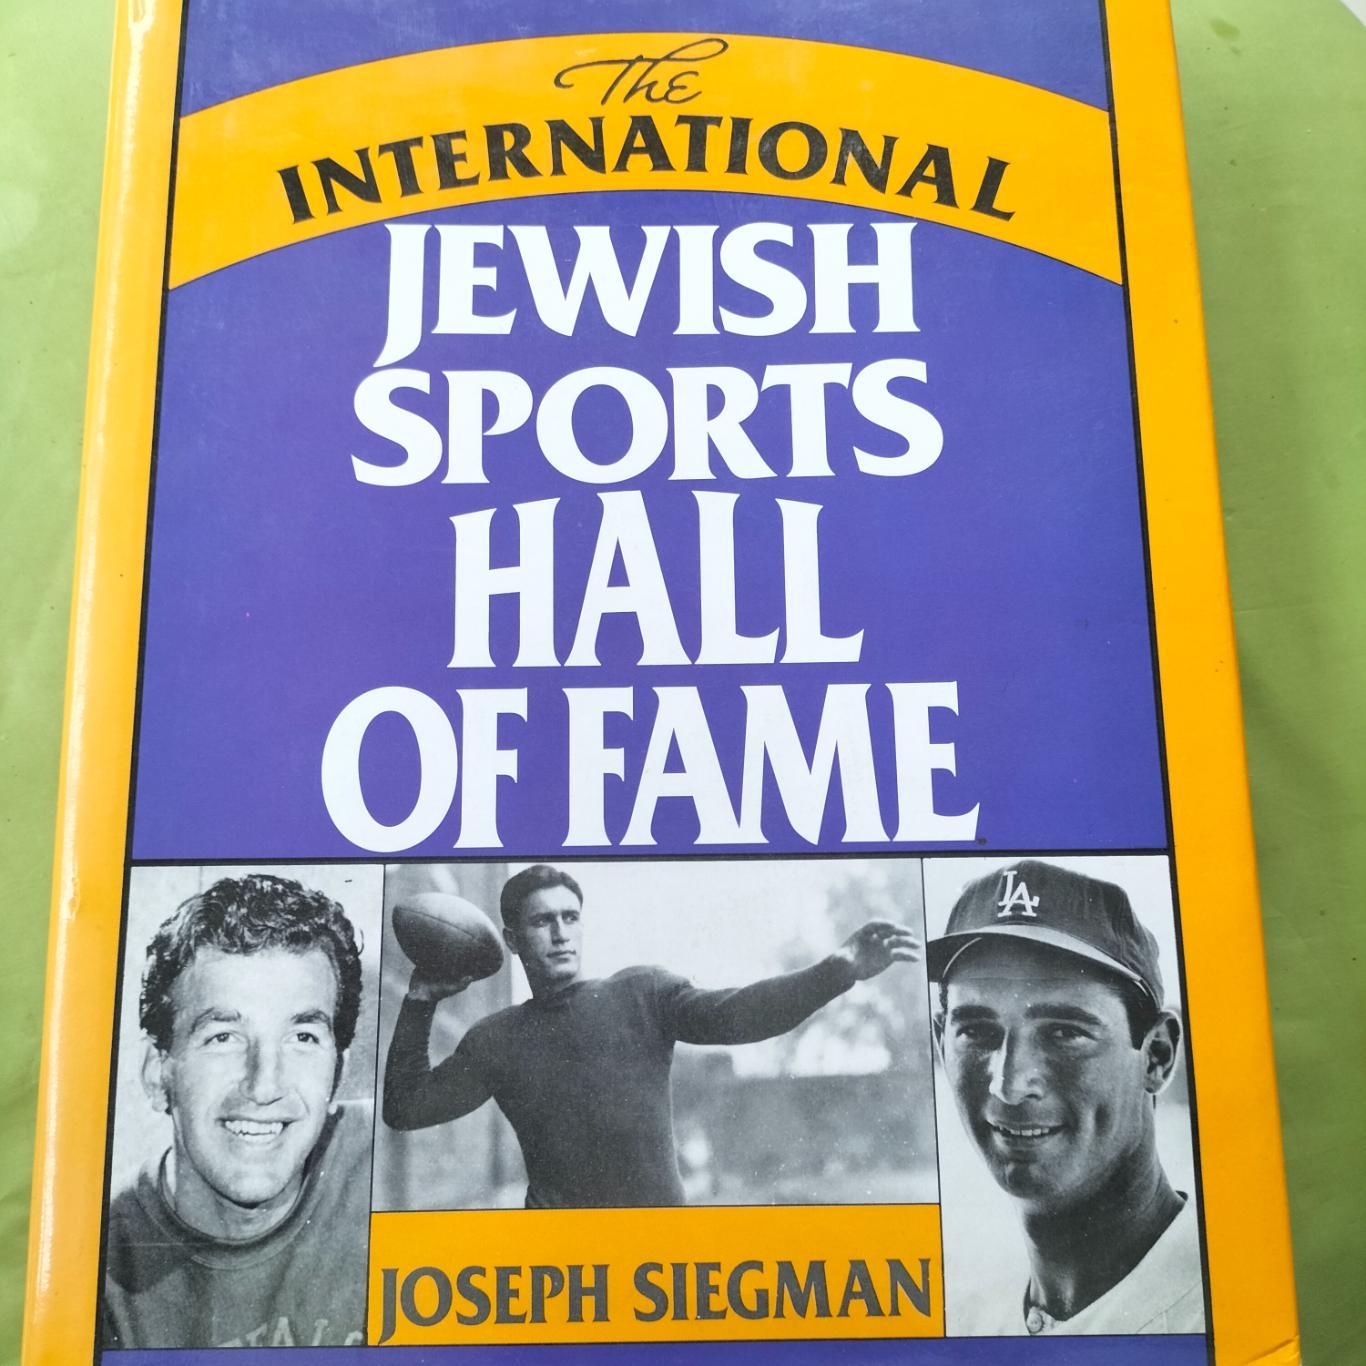 Jewish sports hall of fame